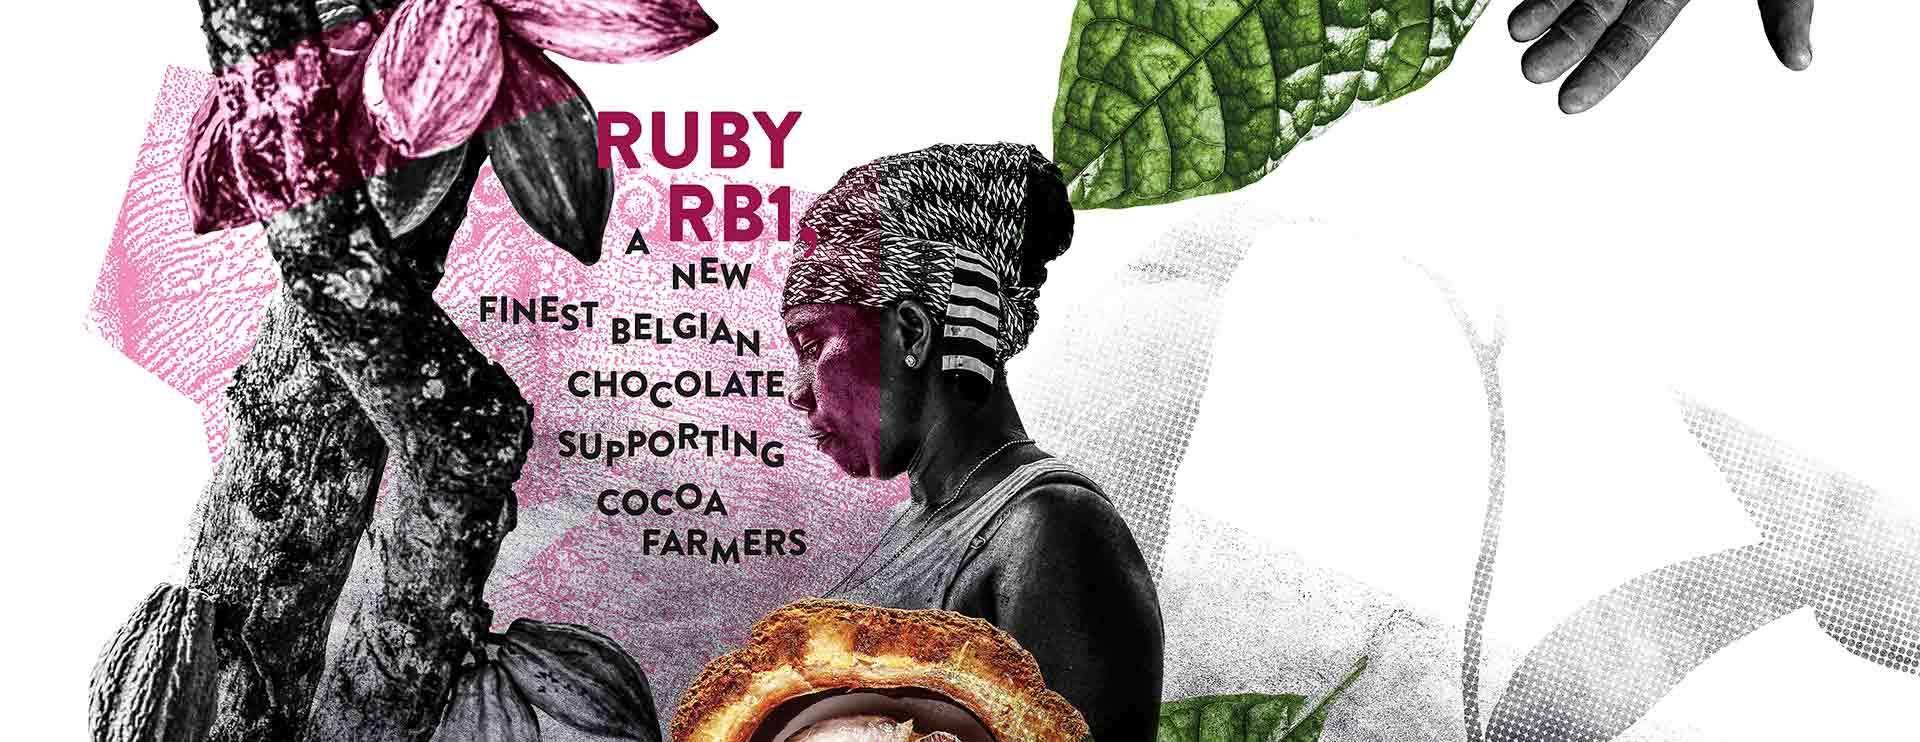 Callebaut Ruby RB1 Chocolat Fondation Cocoa Horizons